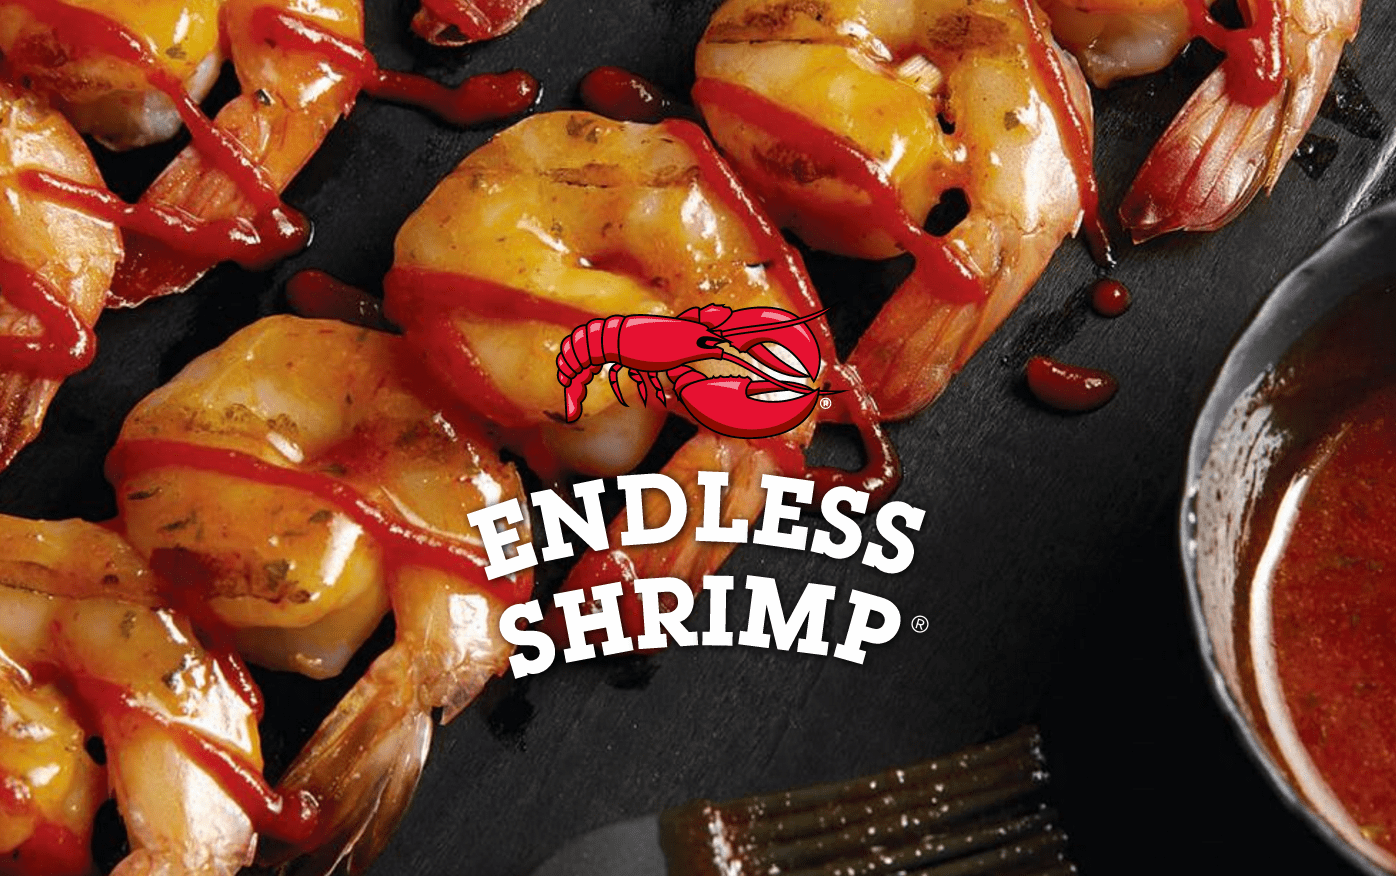 Red Lobster Canada Endless Shrimp Promotion Is Back ...